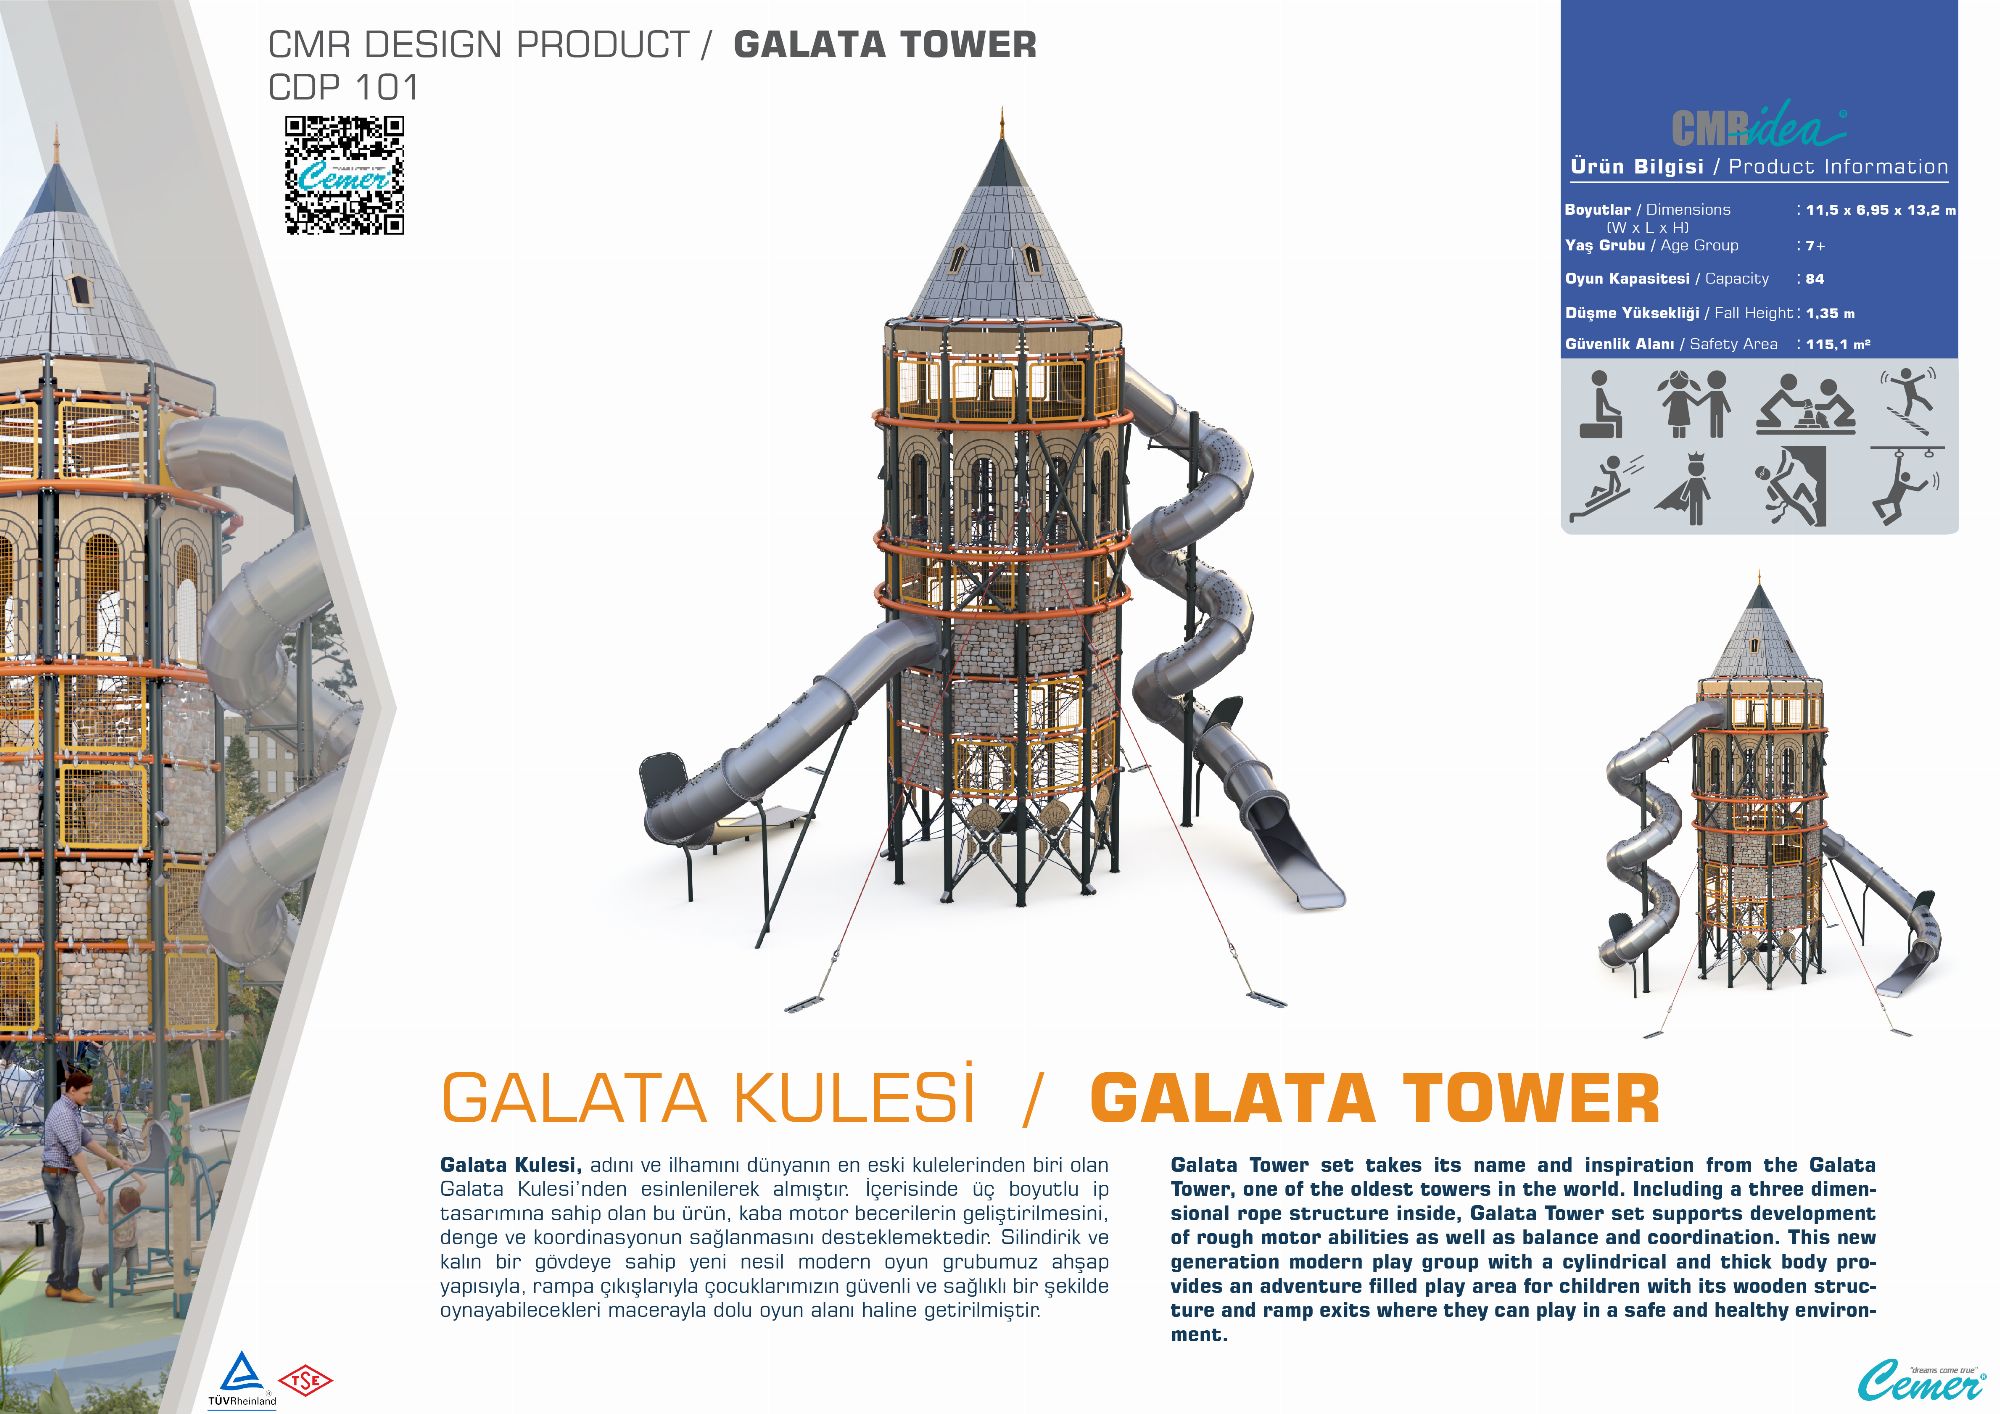 cdp-101-tse-cdp-101---galata-tower-1.jpg